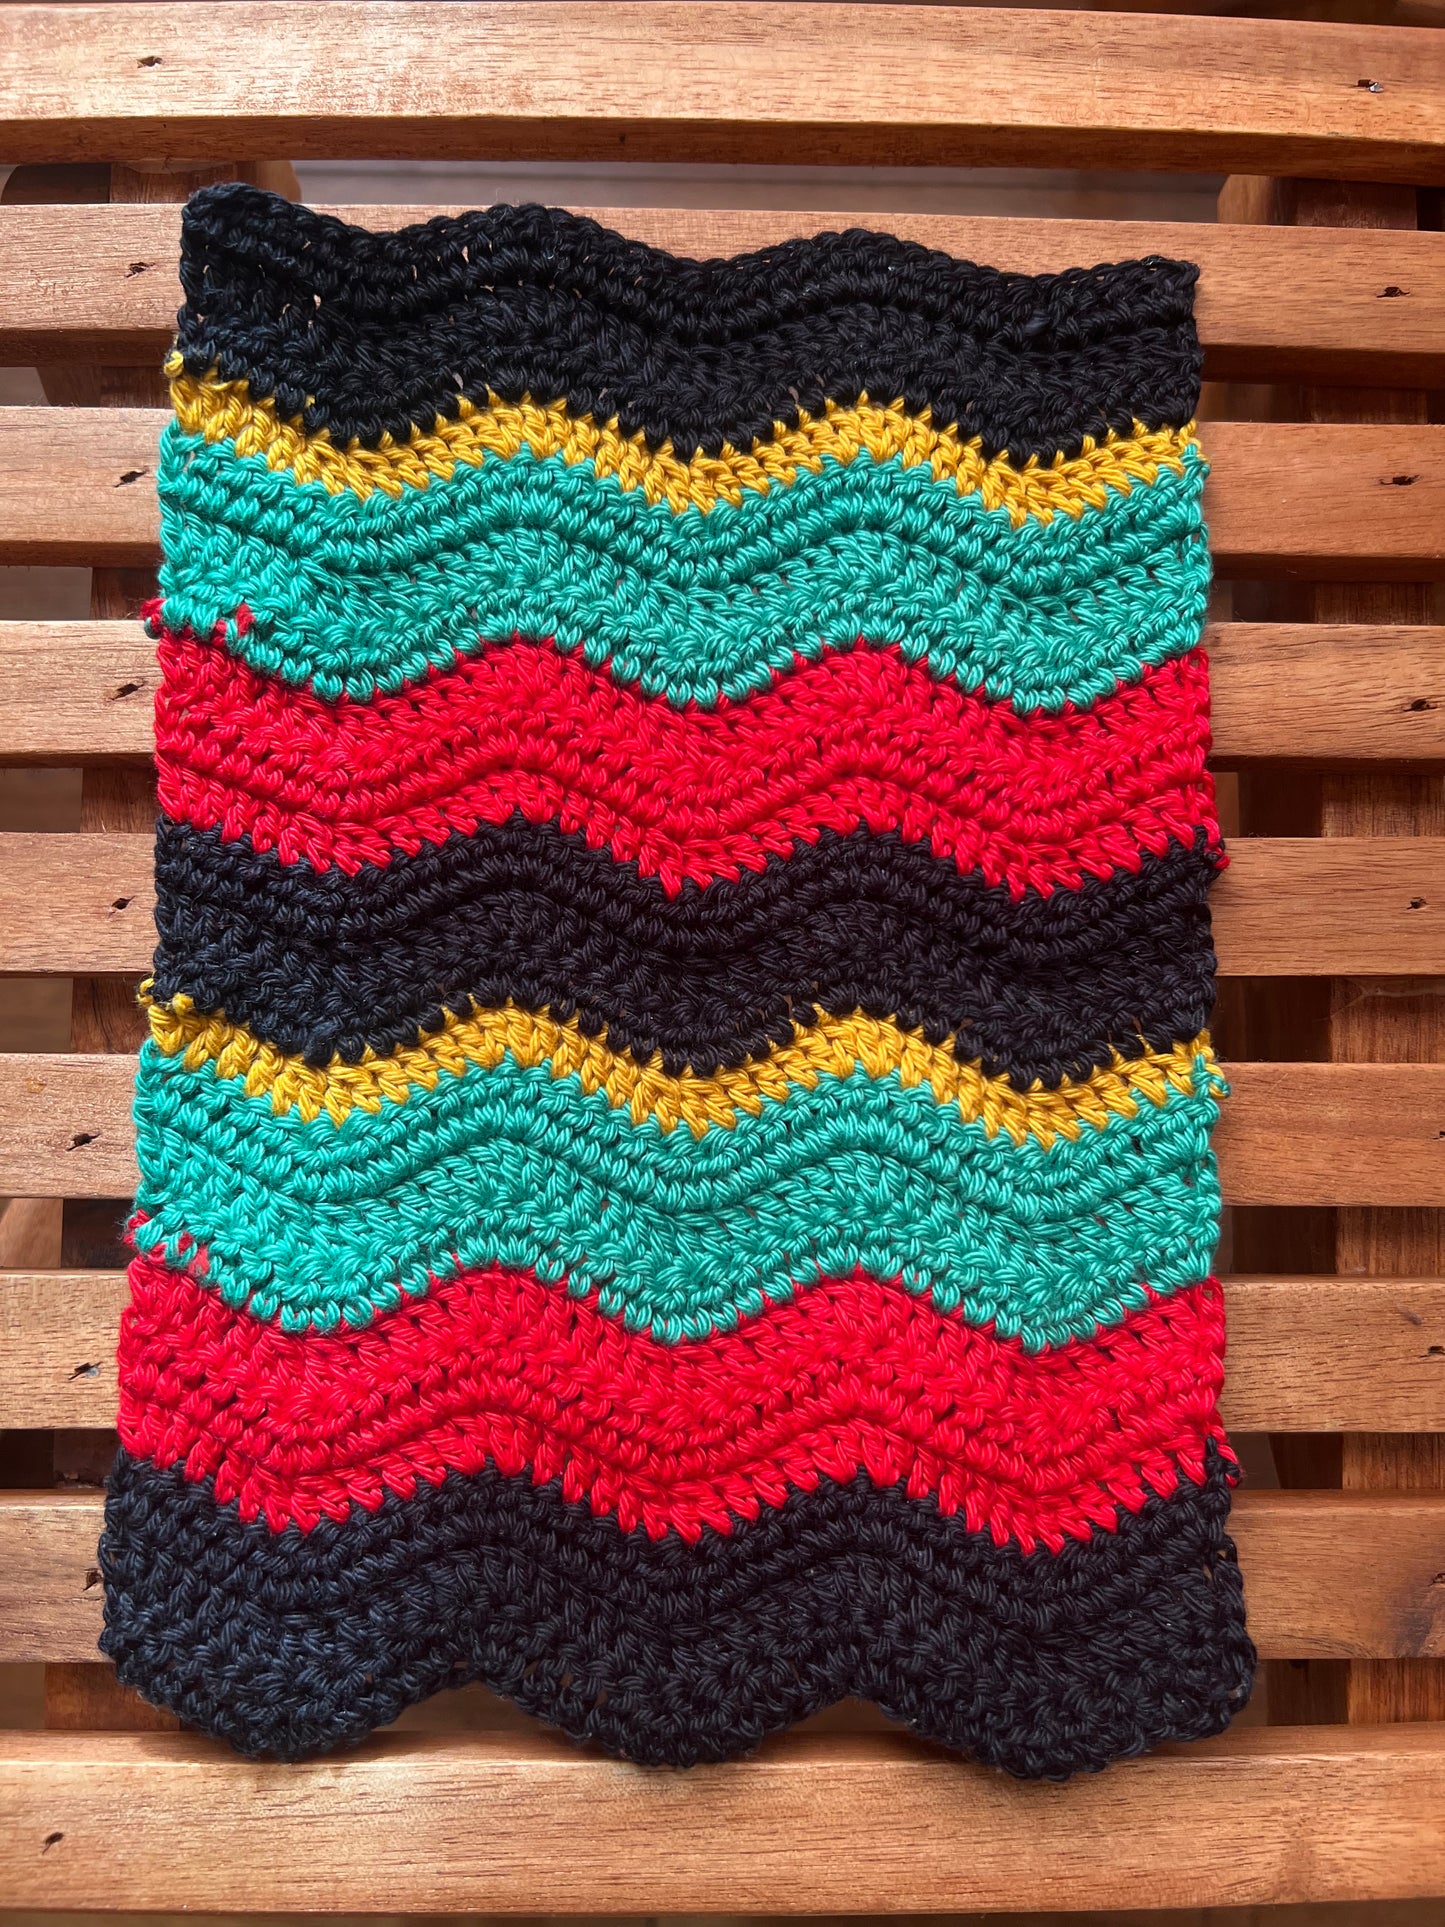 Crochet Snack Mat in Pan African Ripple Design